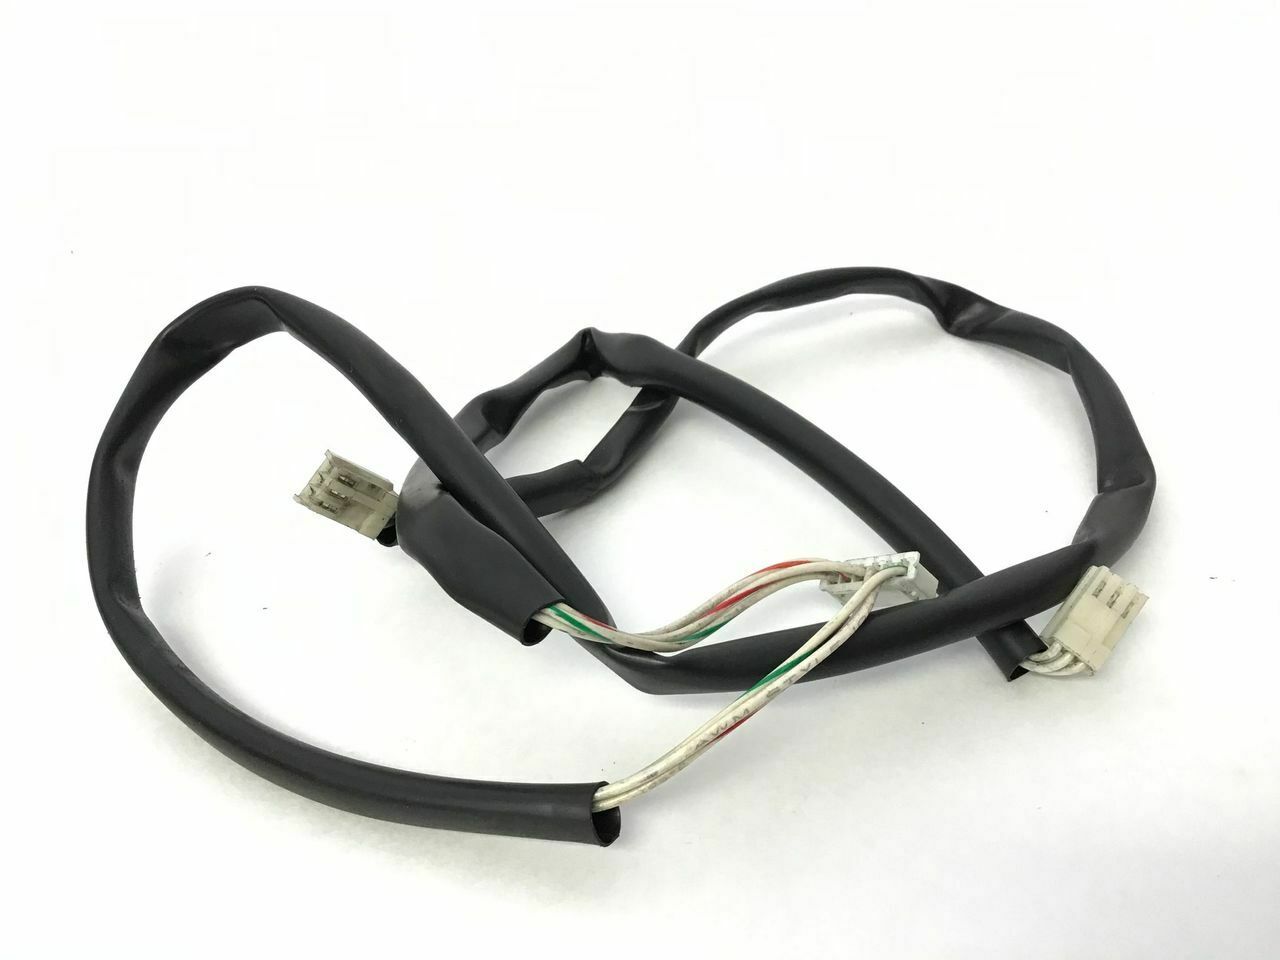 Keys Fitness - 8500 Treadmill Incline Wire Harness (Used)